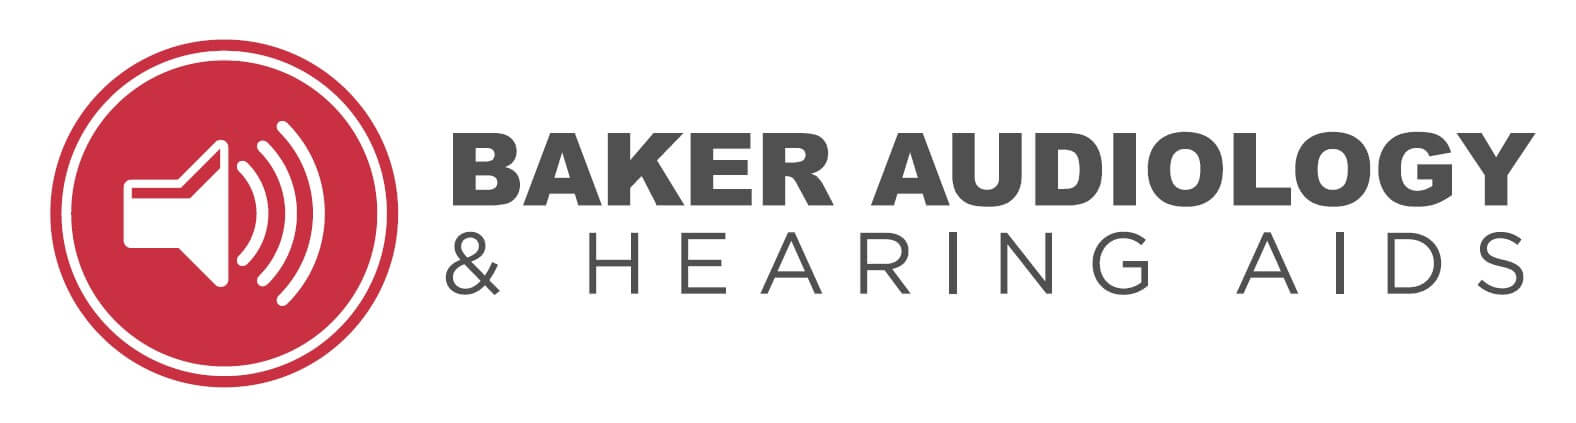 Baker Audiology